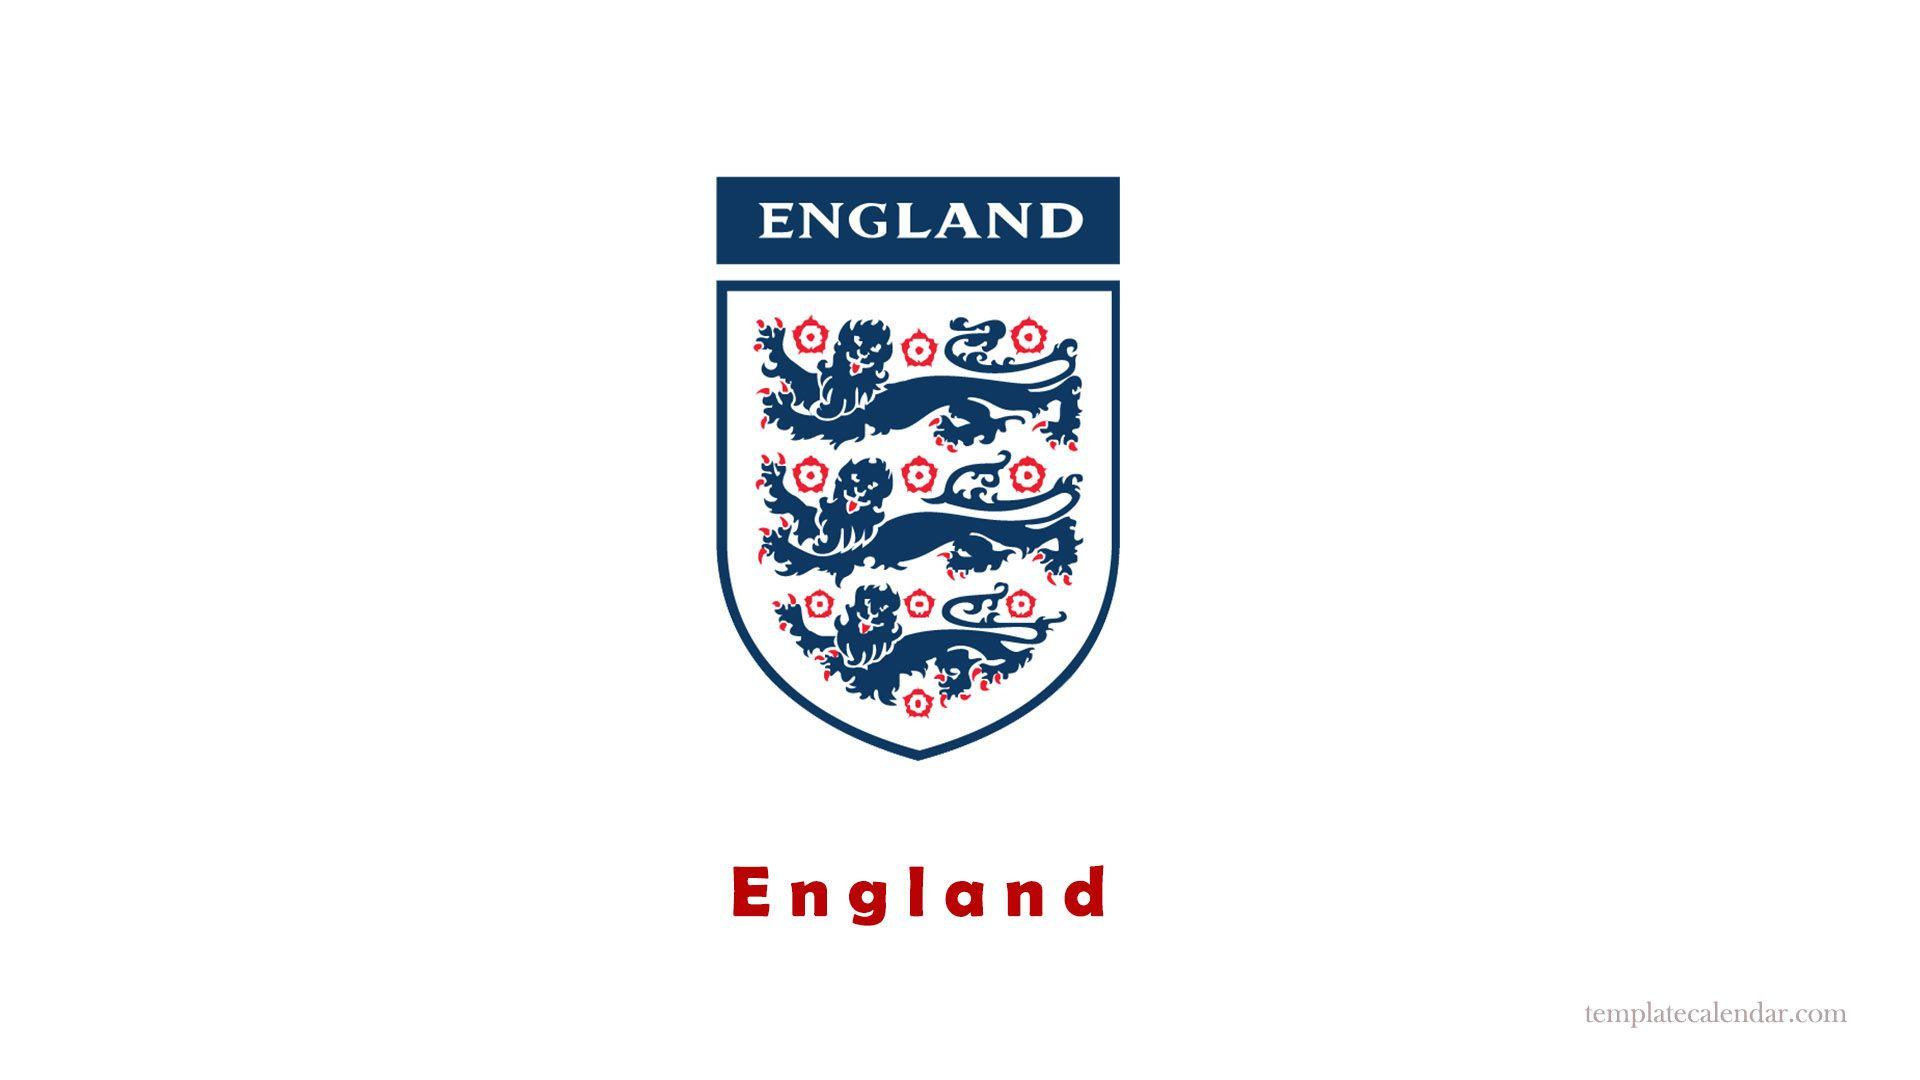 England Football Club Wallpaper